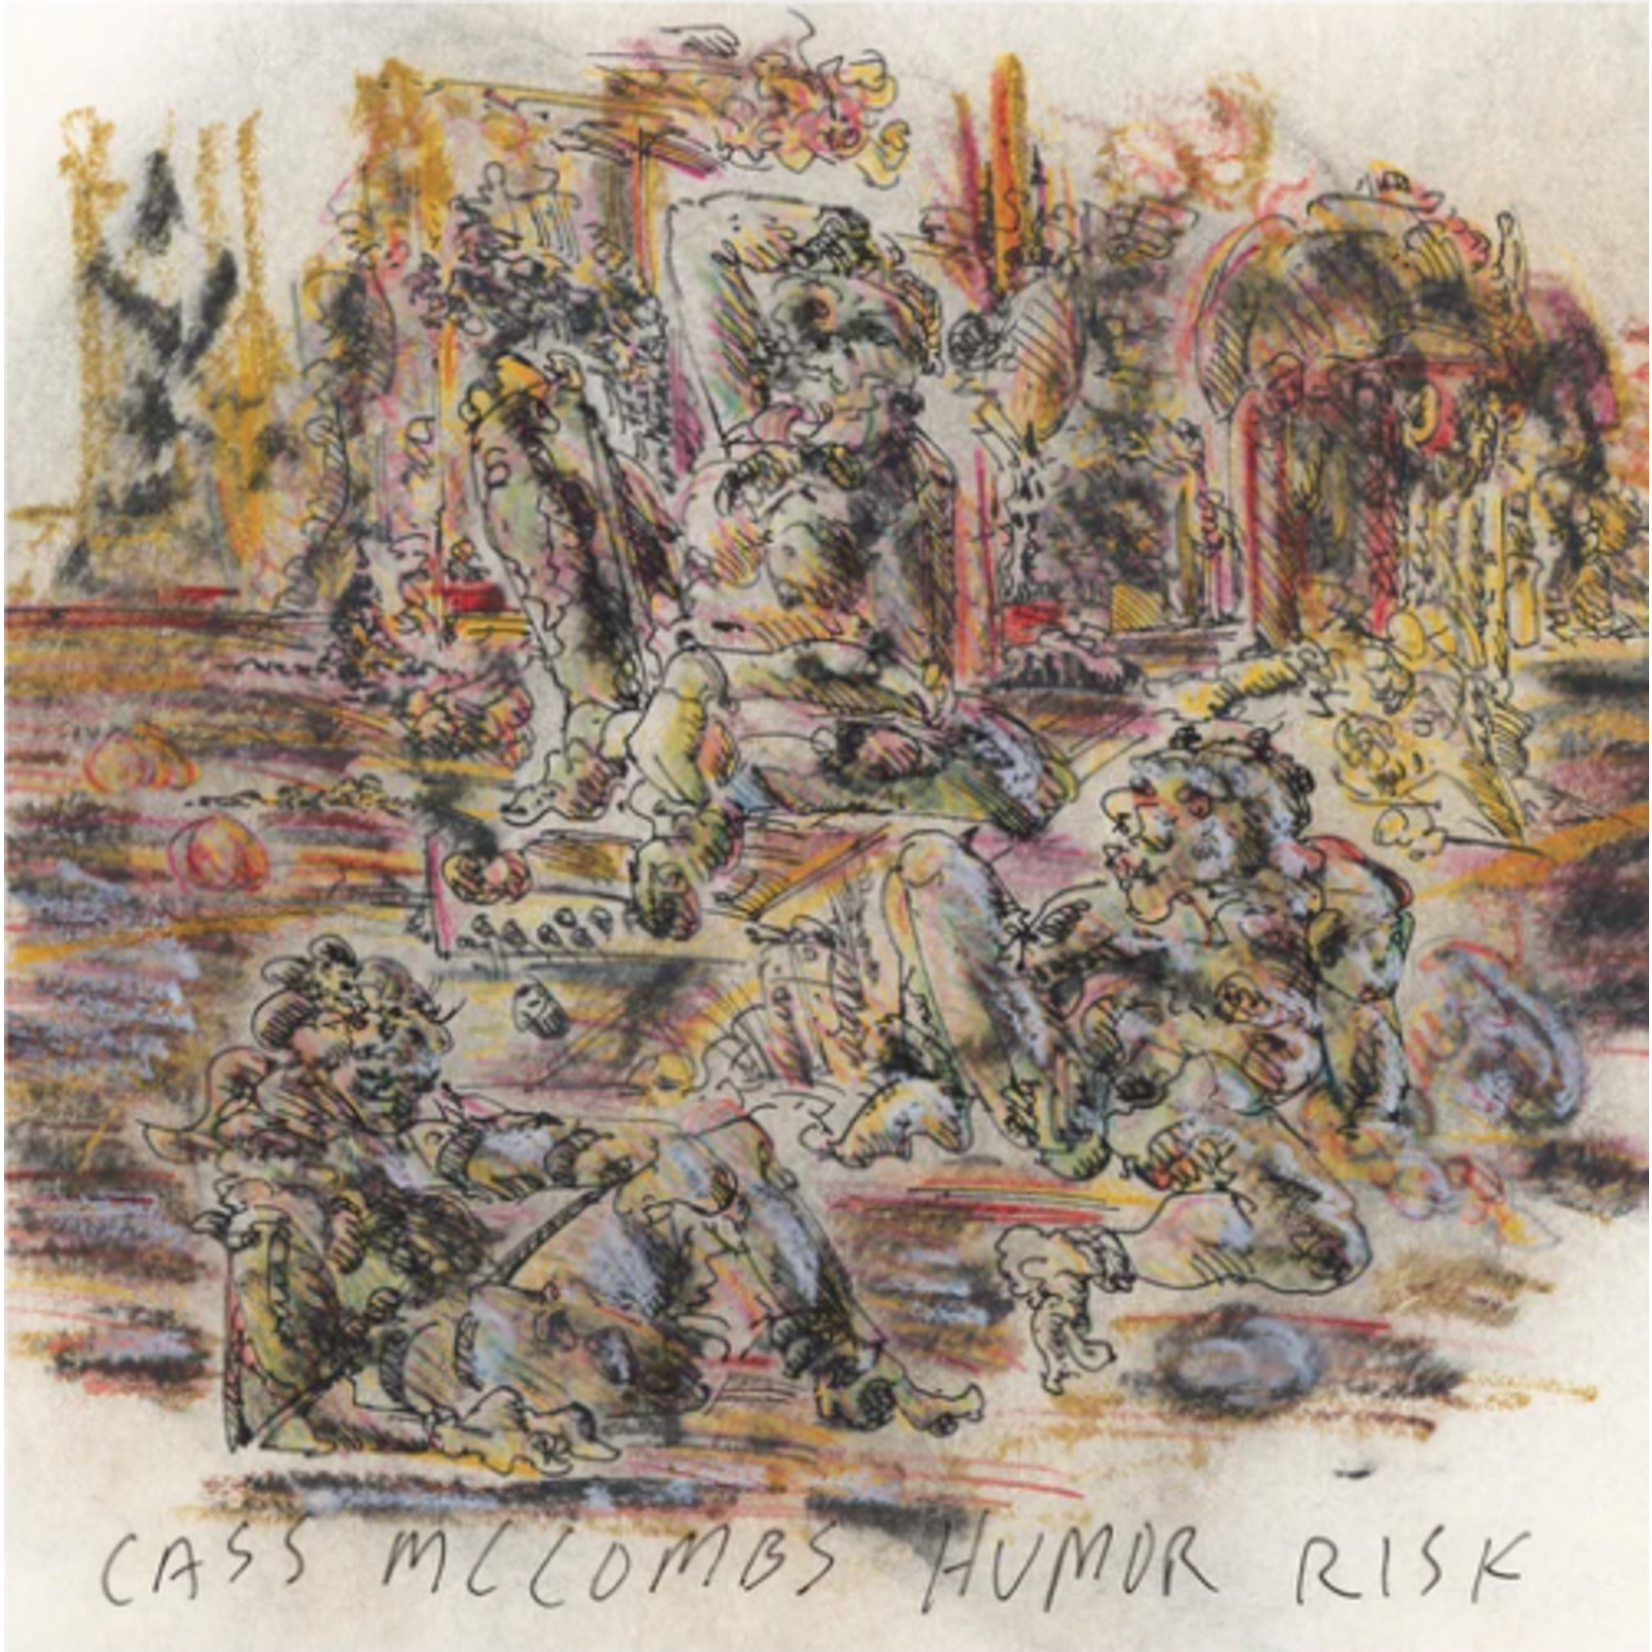 Domino Cass McCombs - Humor Risk (LP)